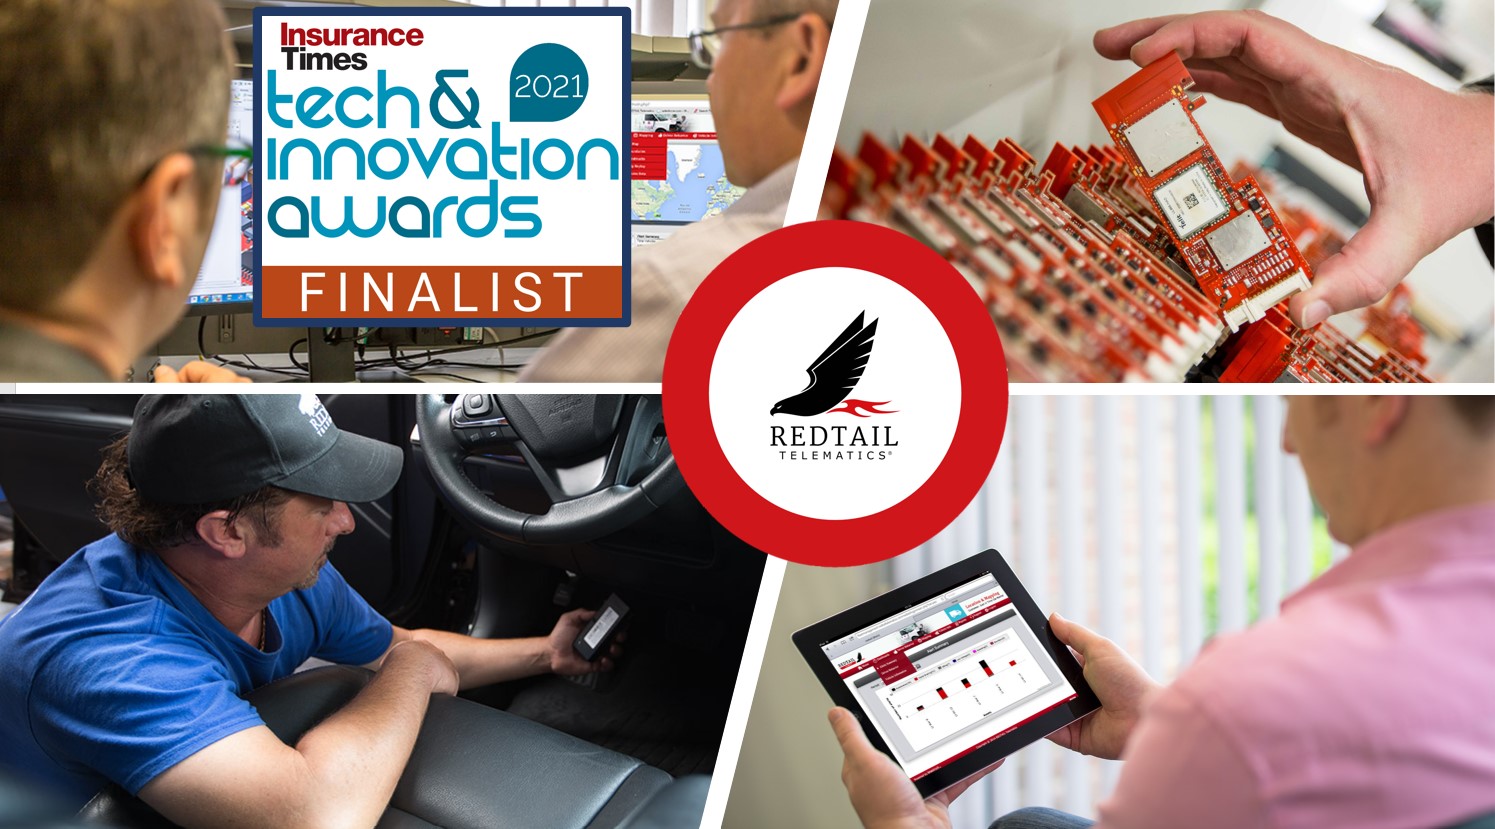 Retail-finalists-Insurance-Times-Tech-Innovation-Awards-2021